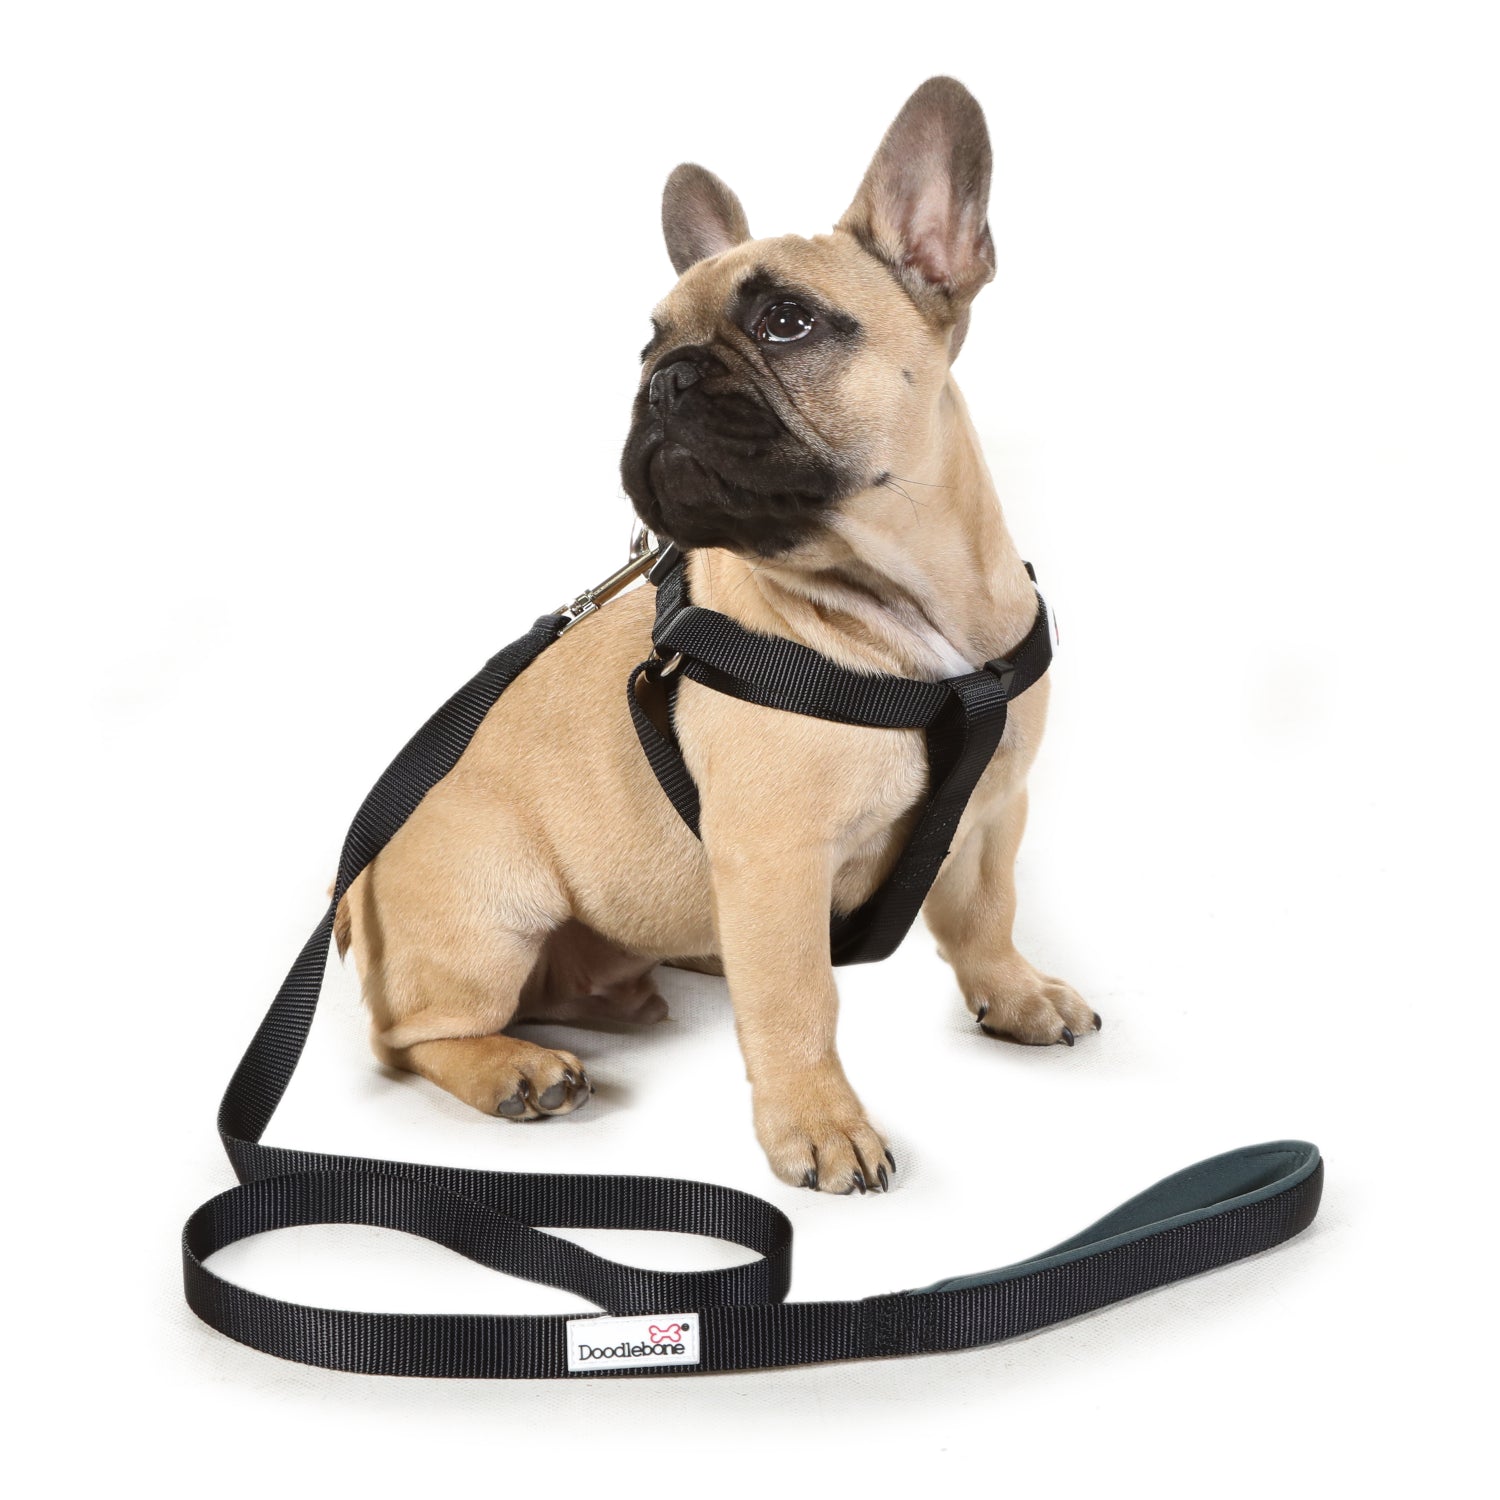 Doodlebone Originals Dog Harness Apple 4 Sizes